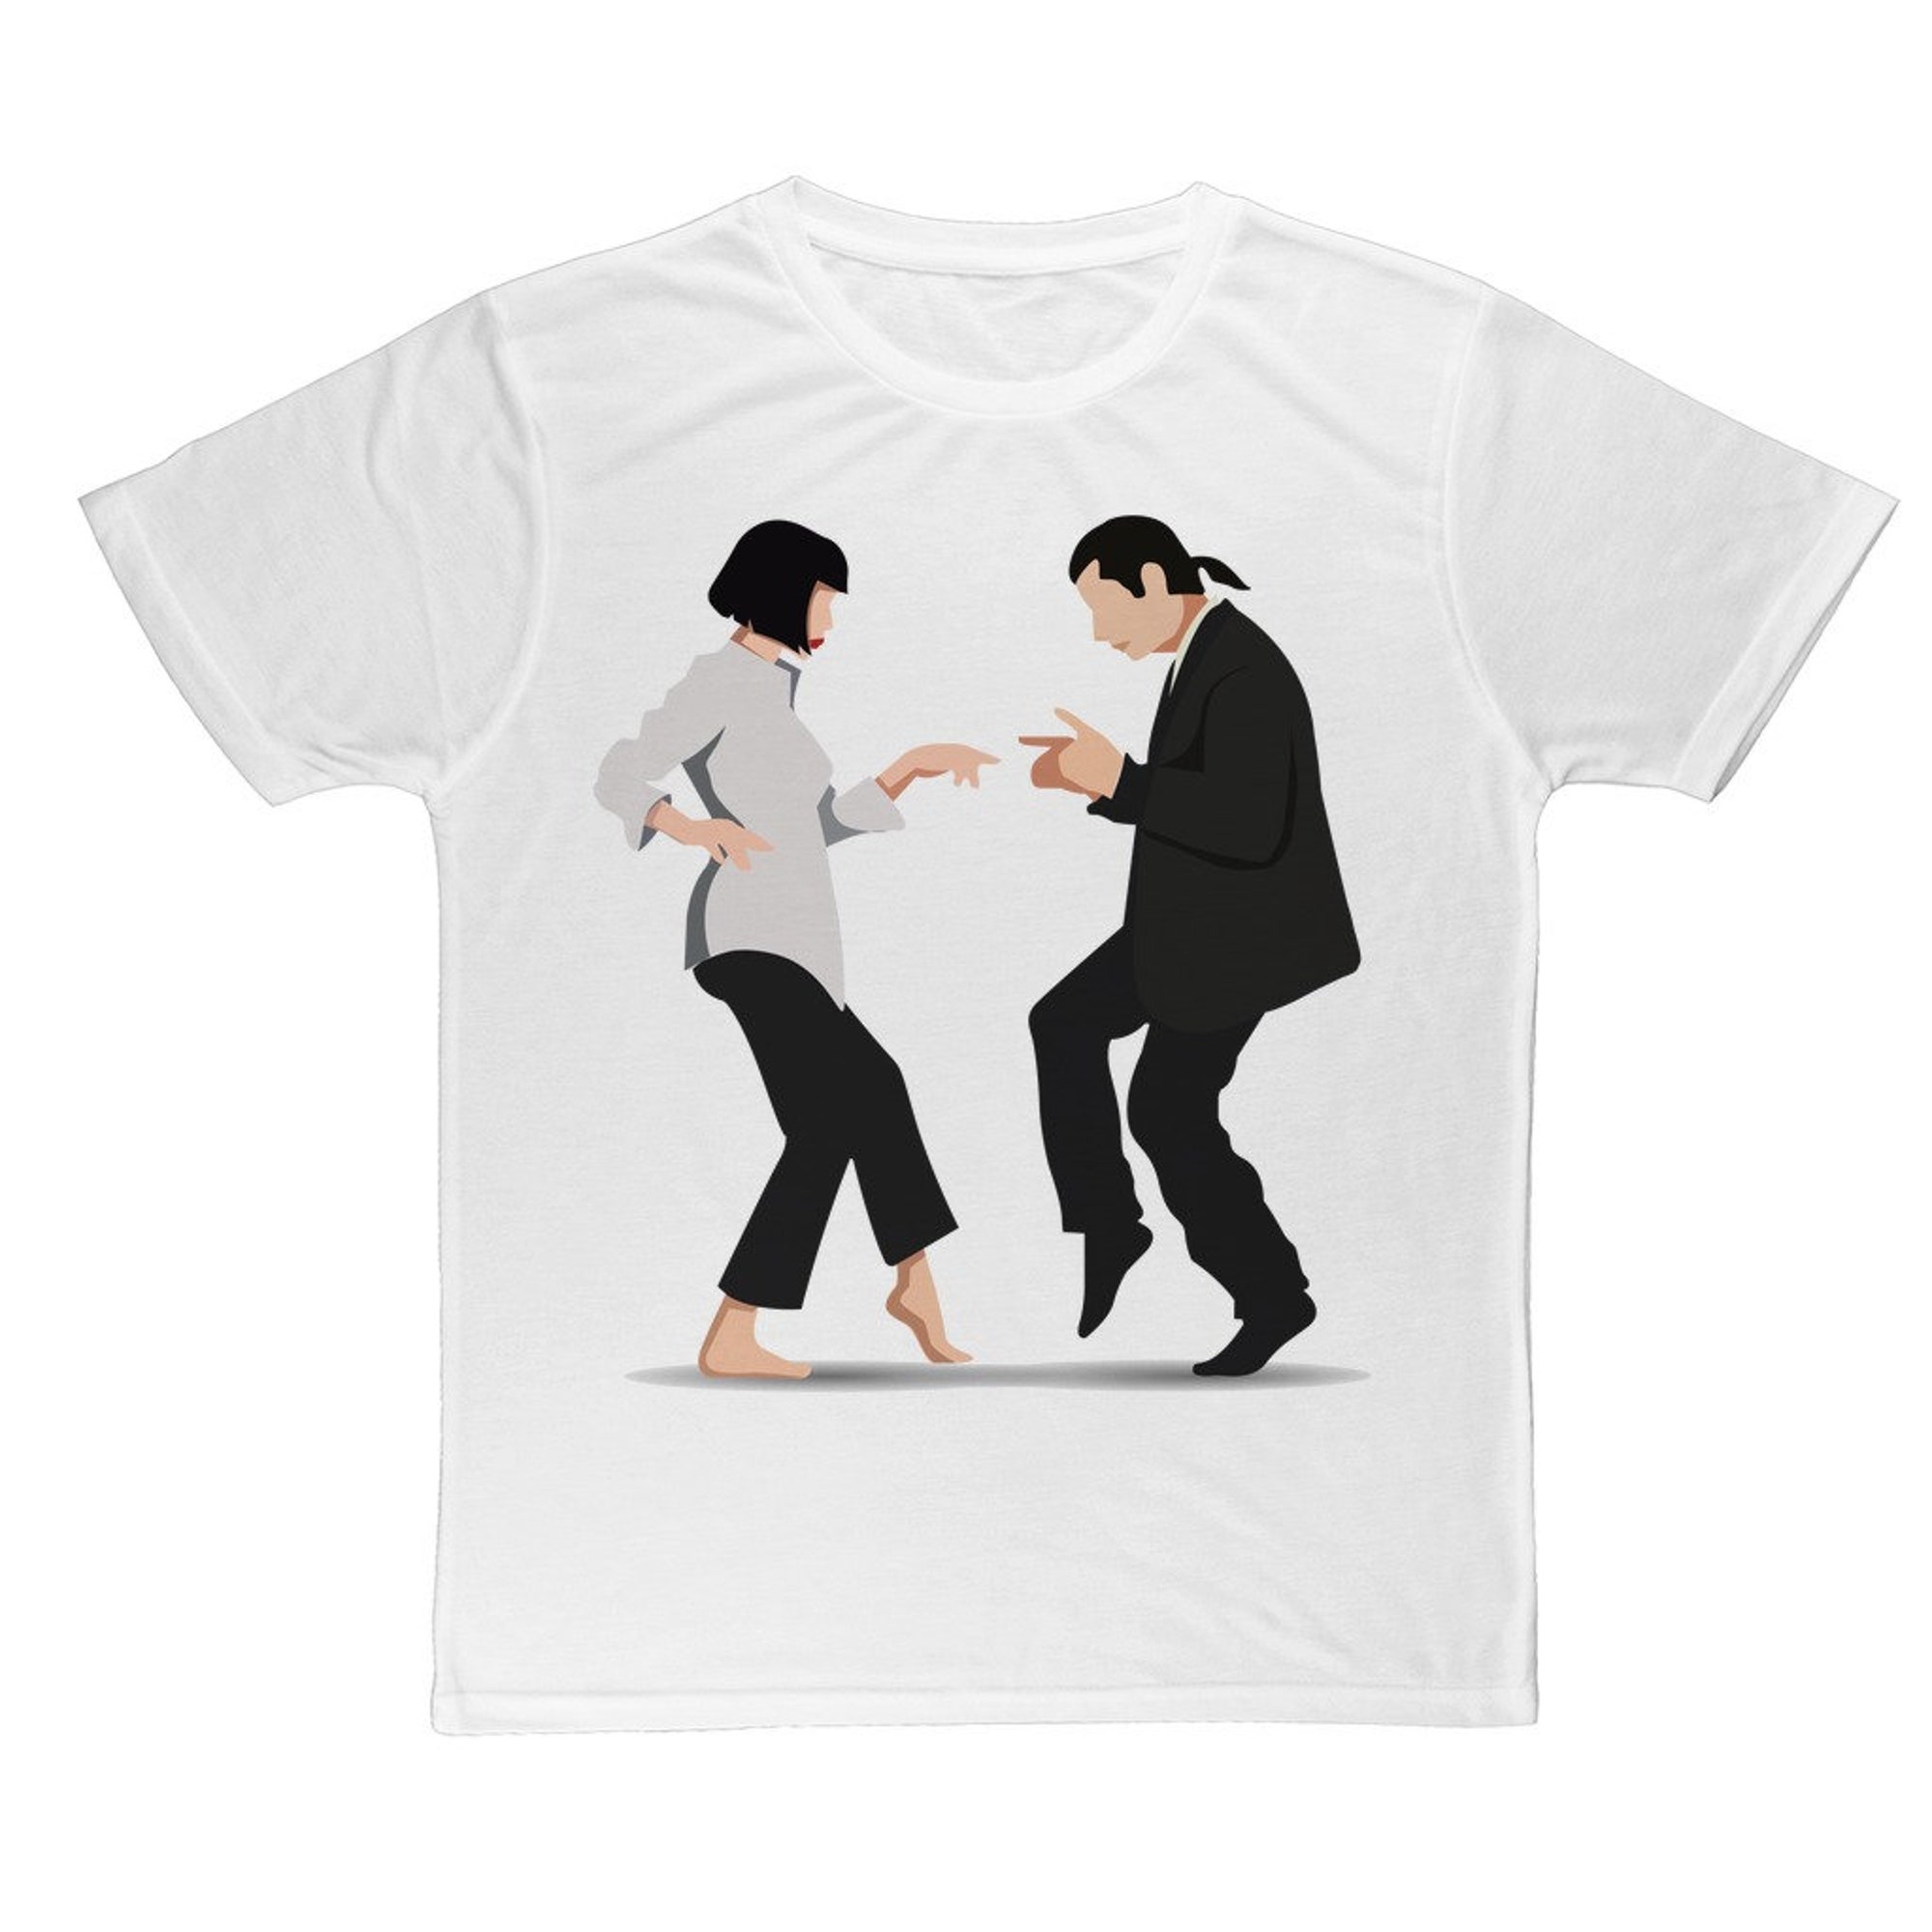 The Twist Pulp Fiction Classic Sublimation Adult T-Shirt